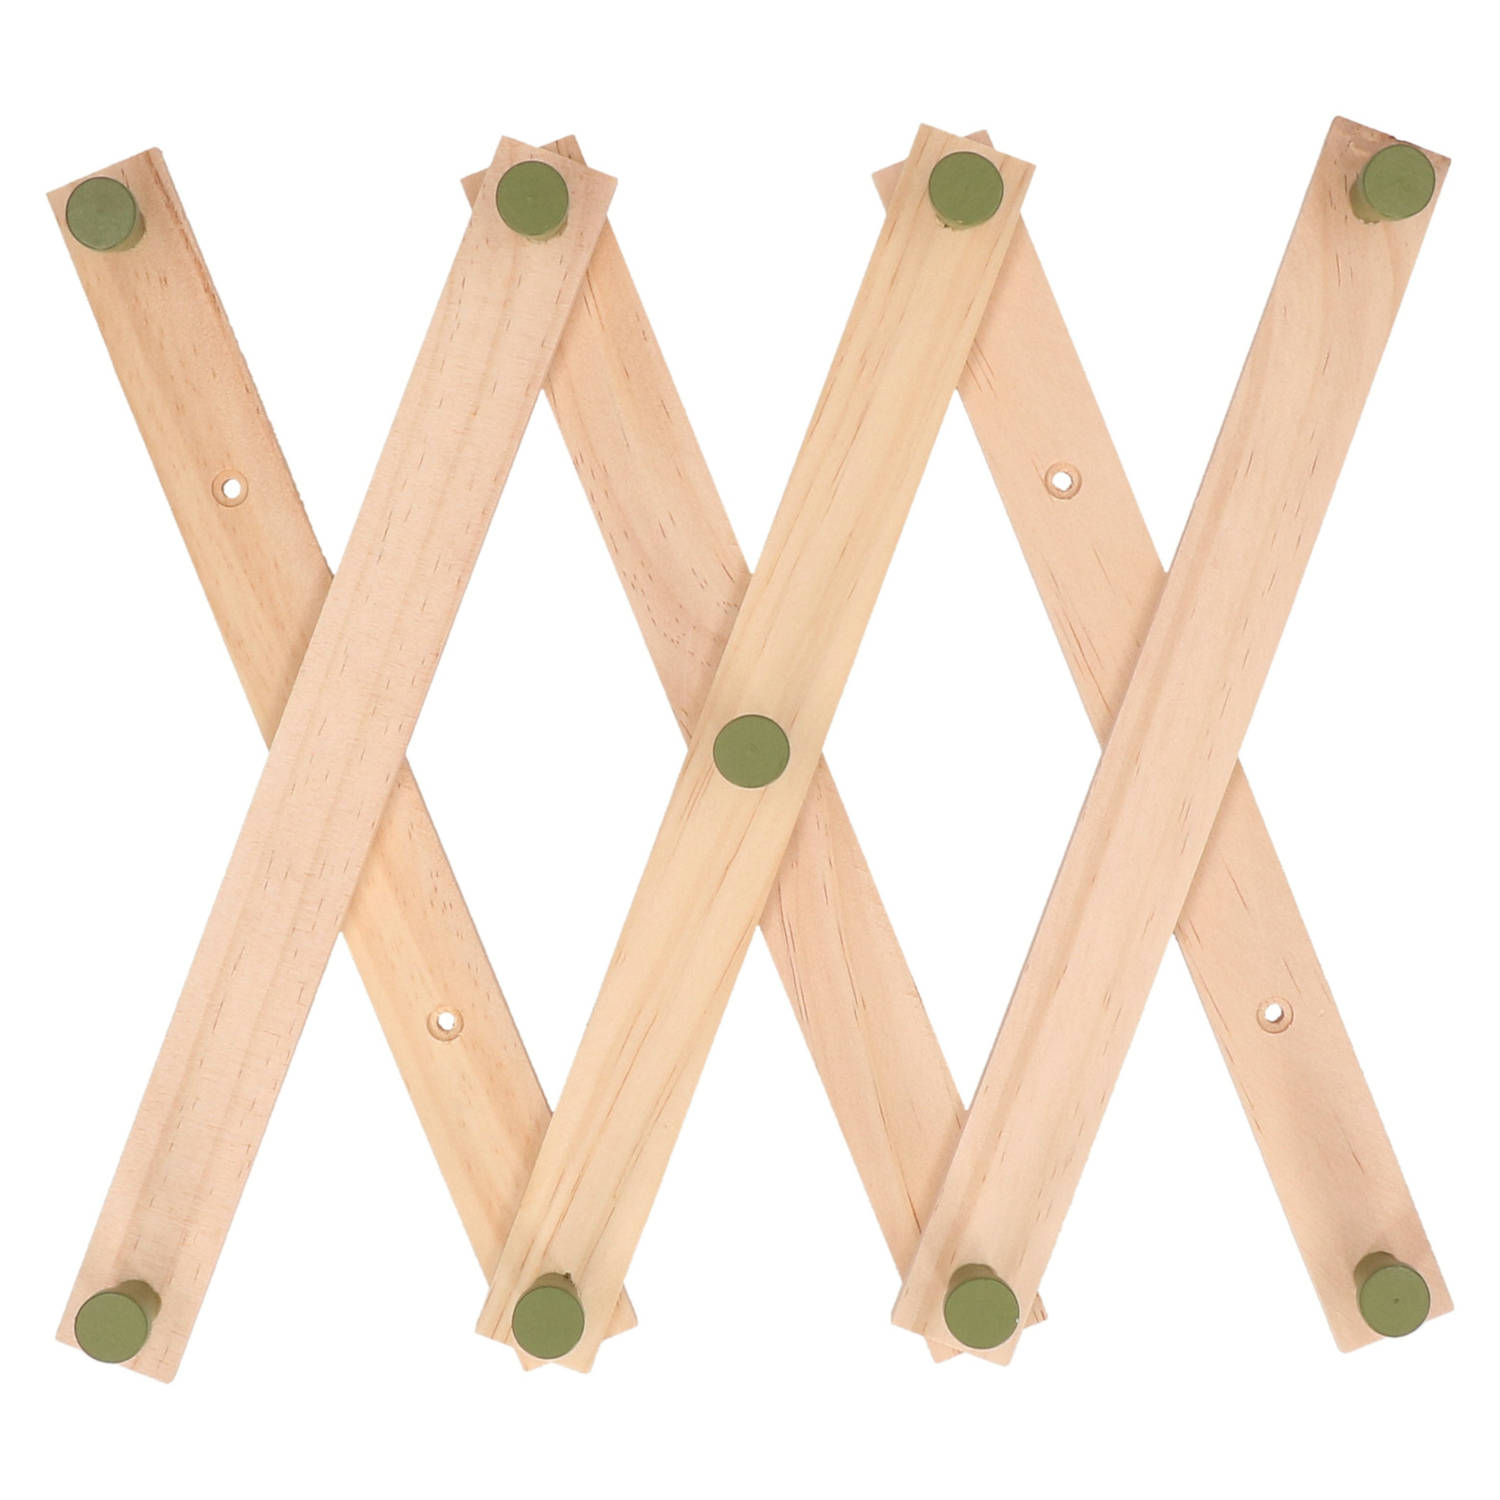 Kinderkamer deurhanger/kapstok verstelbaar - 9 groene haakjes - hout - 60 x 12 cm - Kapstokken